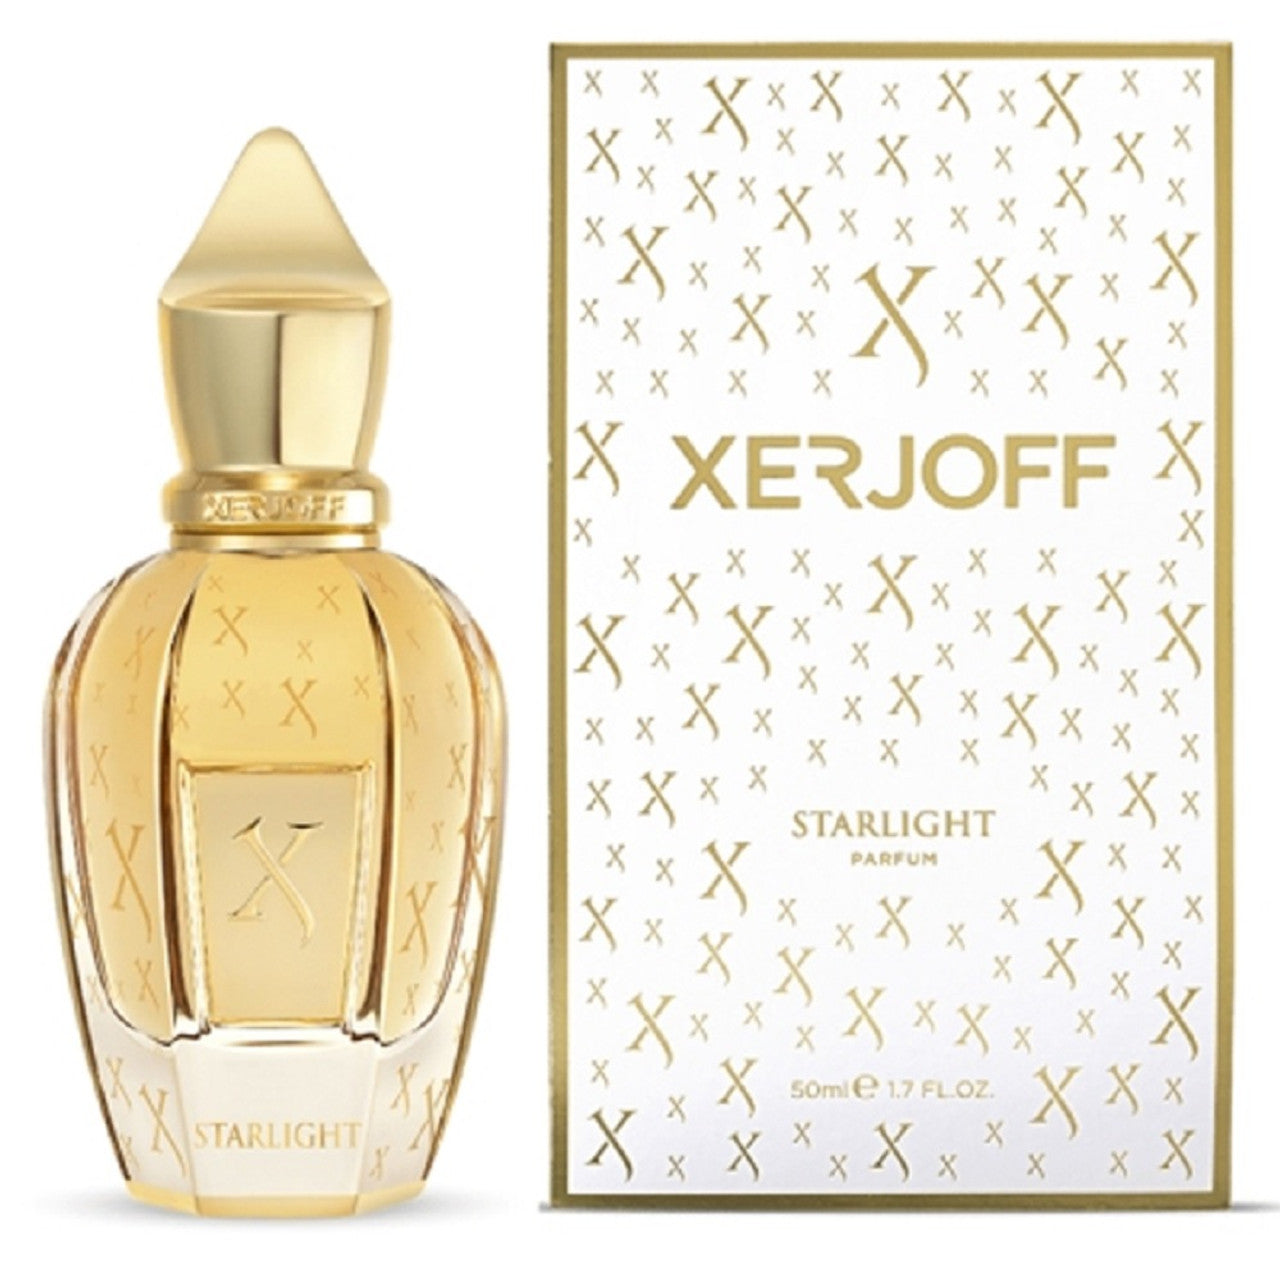 Xerjoff - X Starlight Parfum 50ml | Jodiabaazar.com